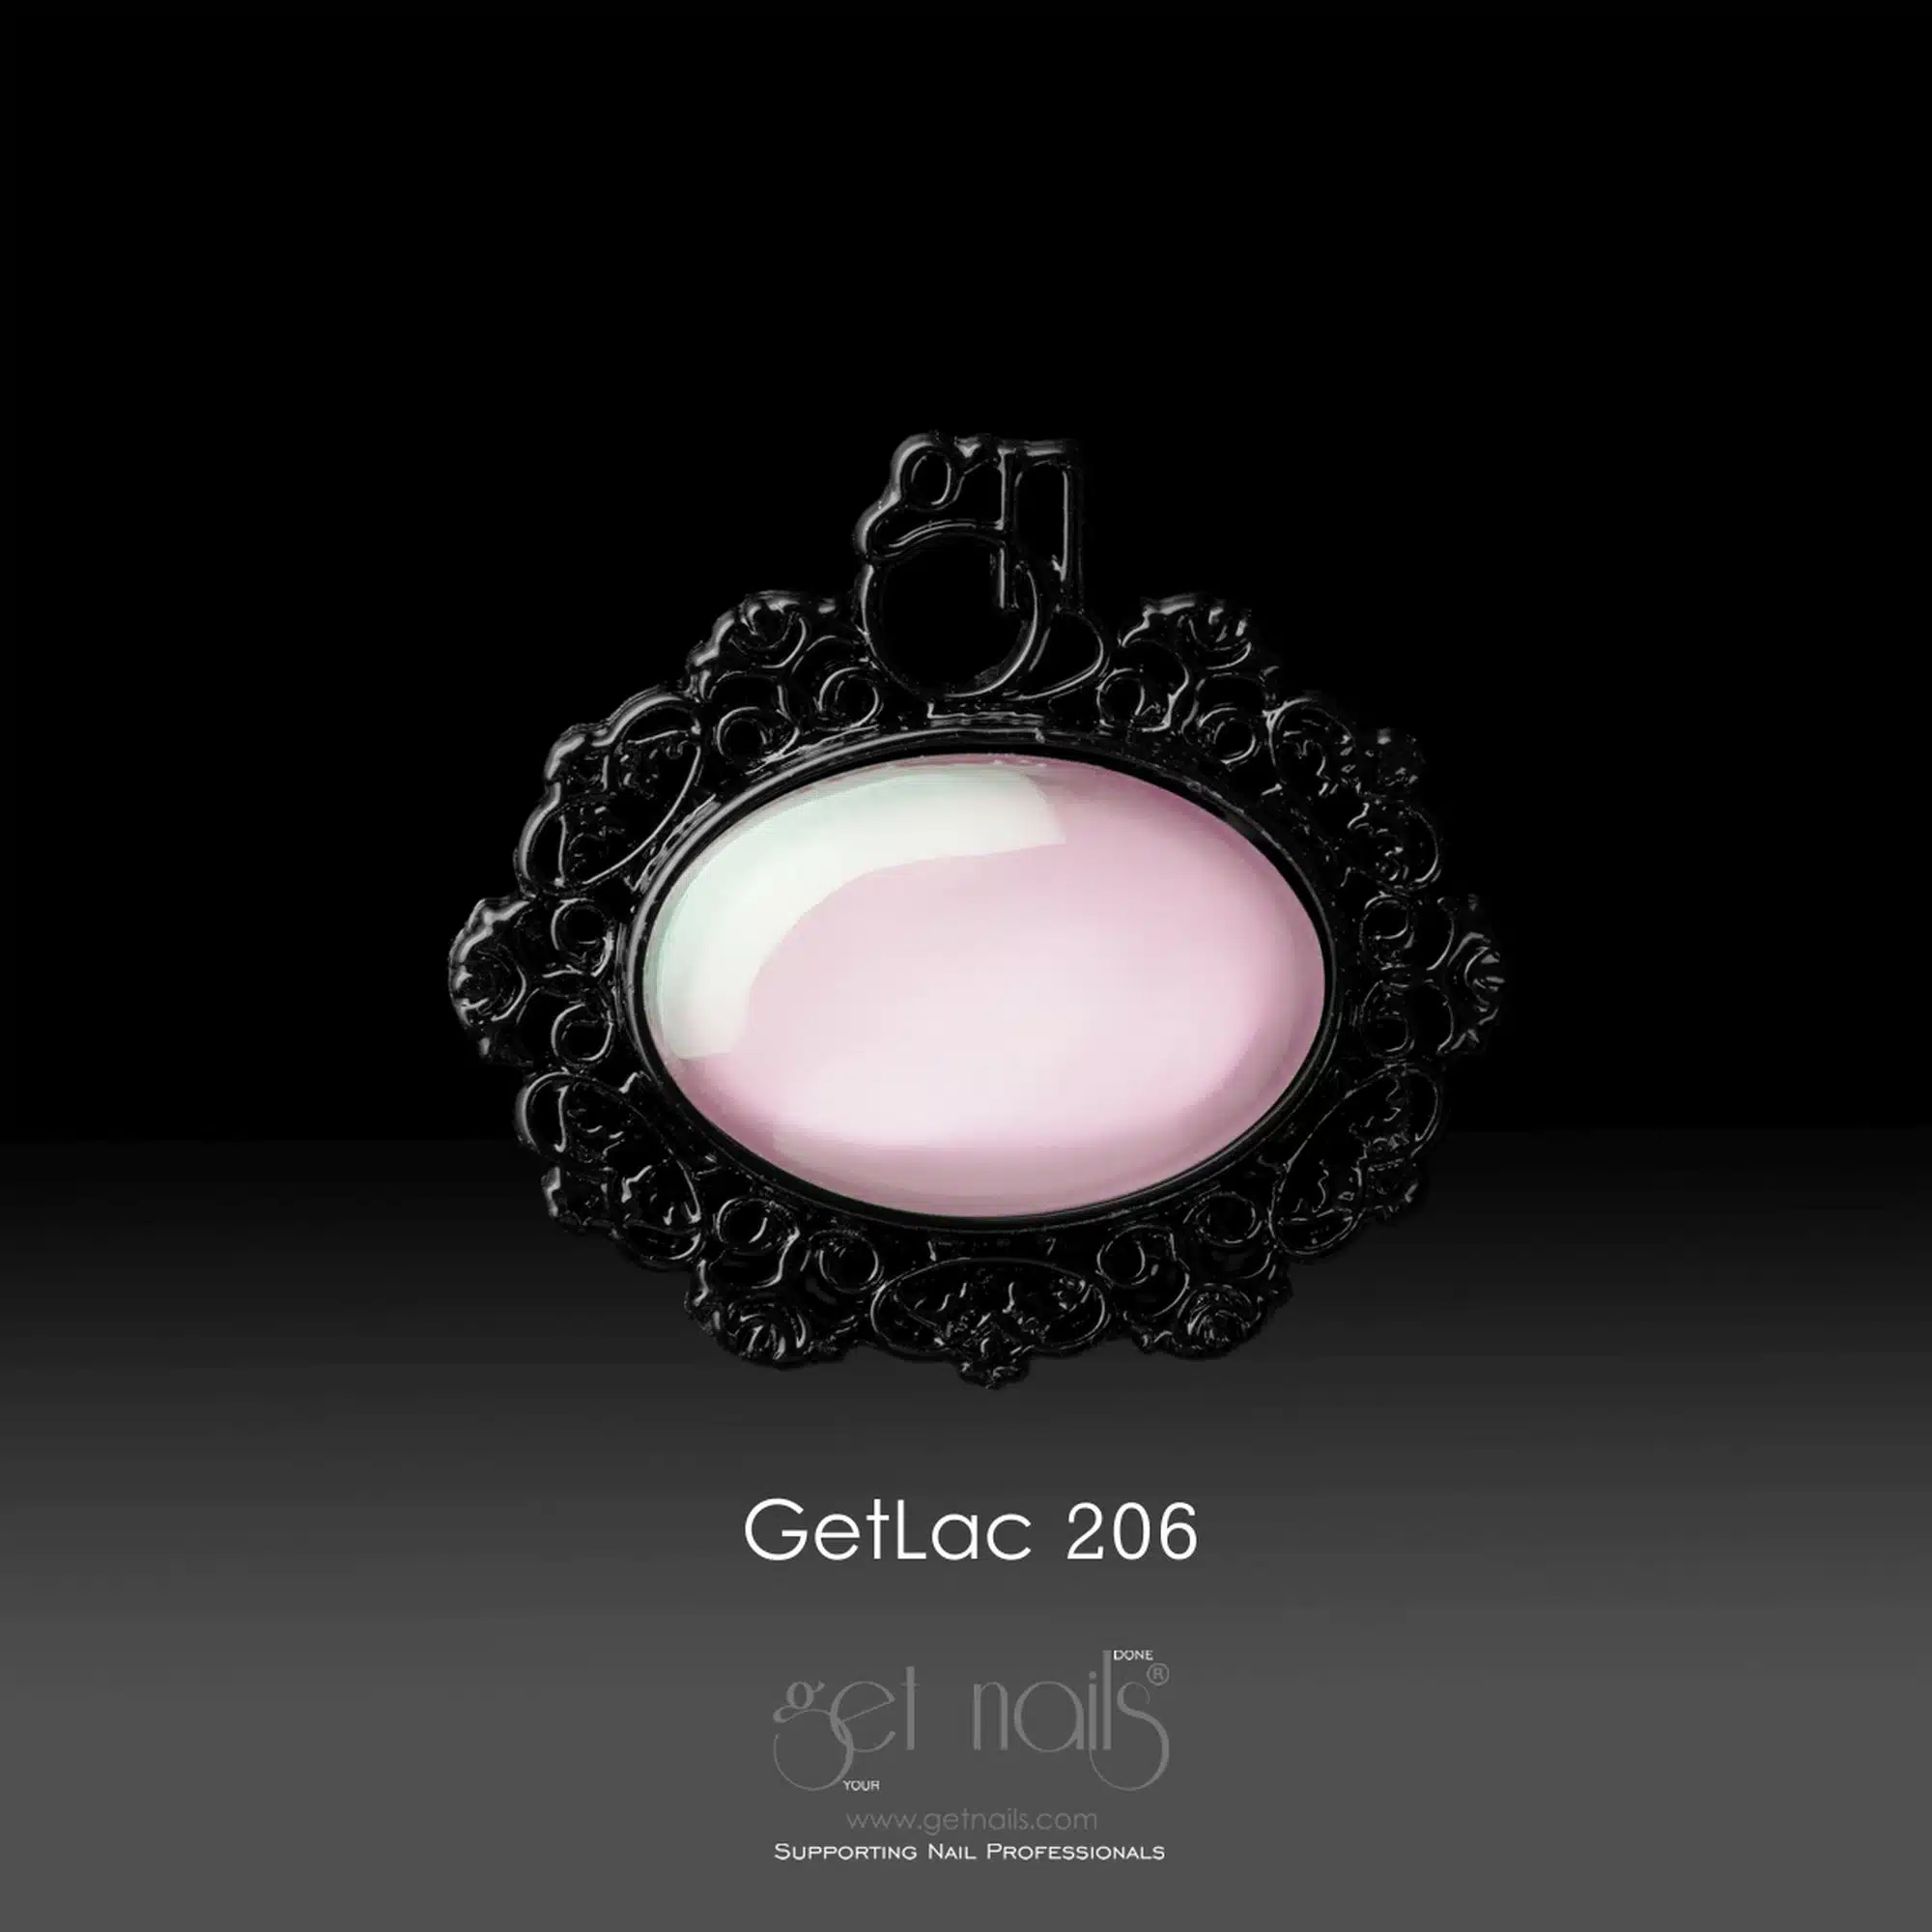 Get Nails Austria - GetLac 206 Candy Macaroon 15g